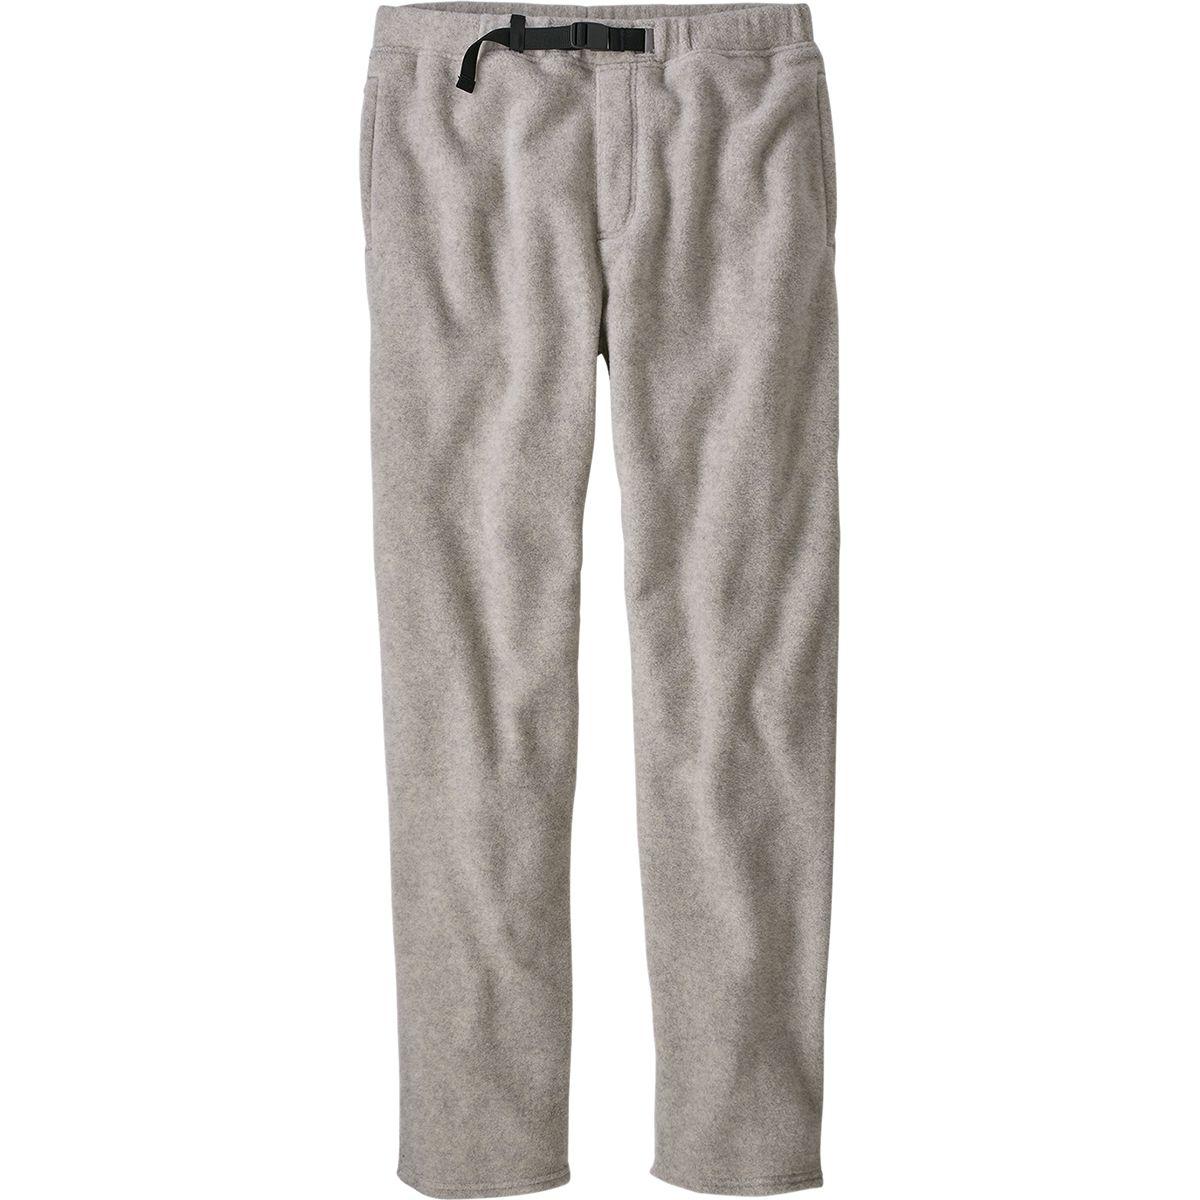 Patagonia Synchilla Fleece Pants - Men's